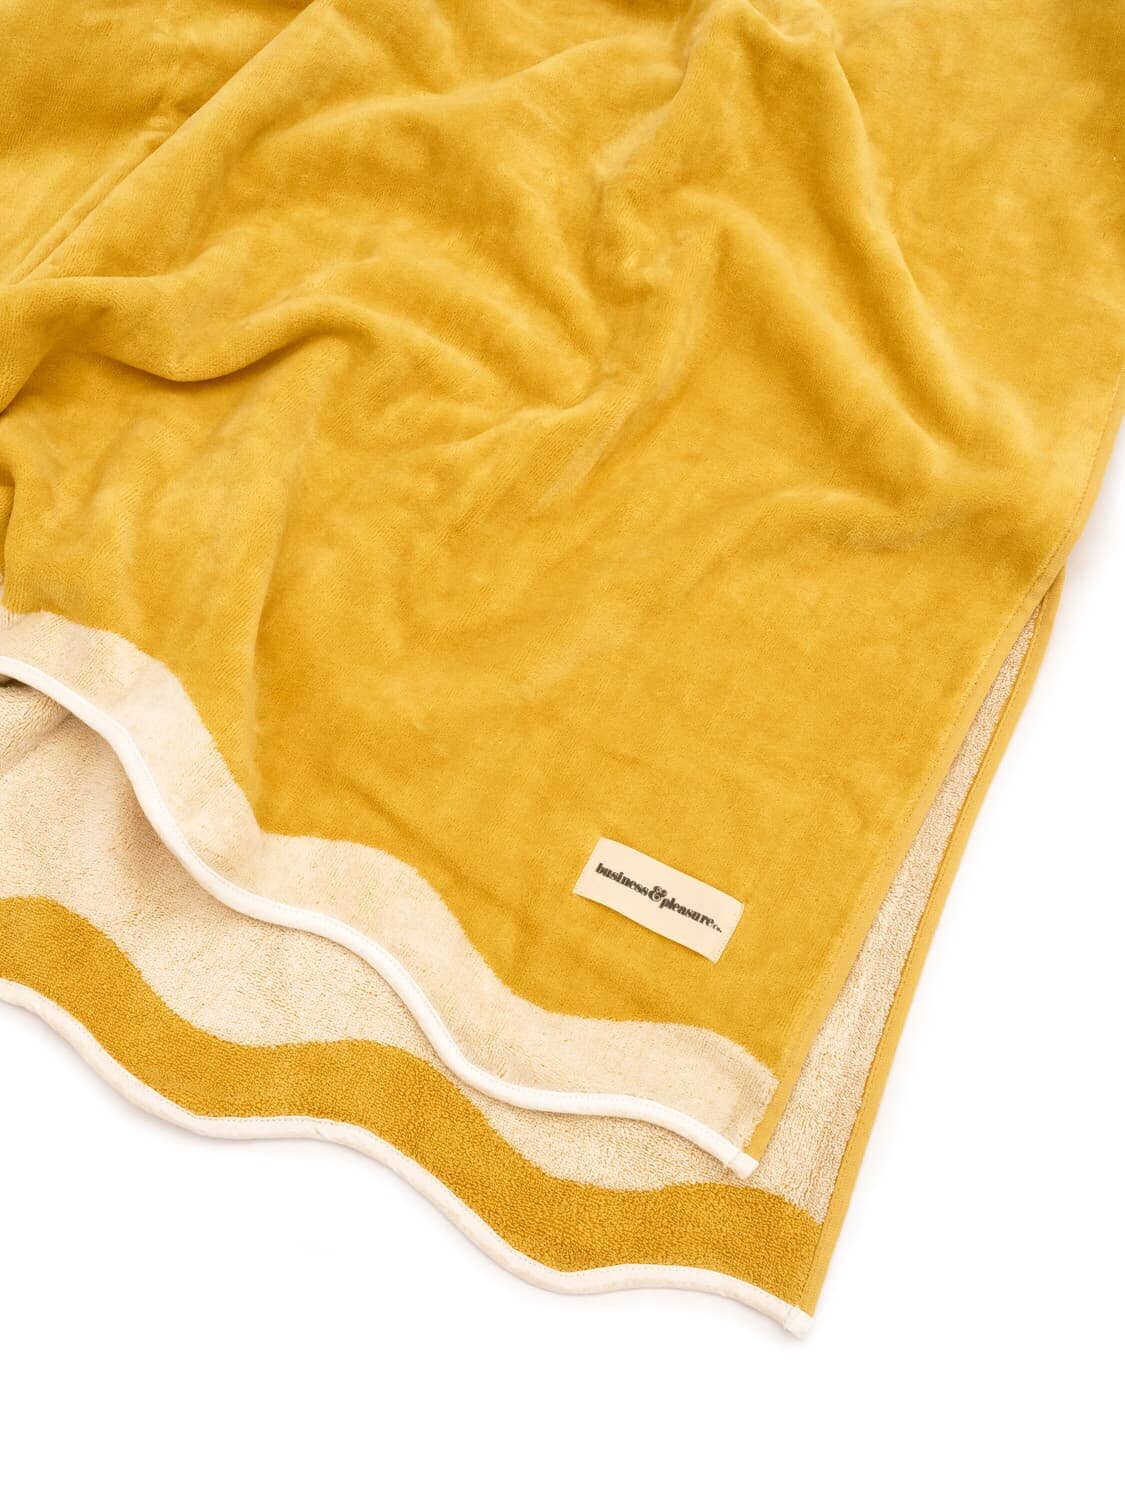 Studio image of riviera mimosa beach towel